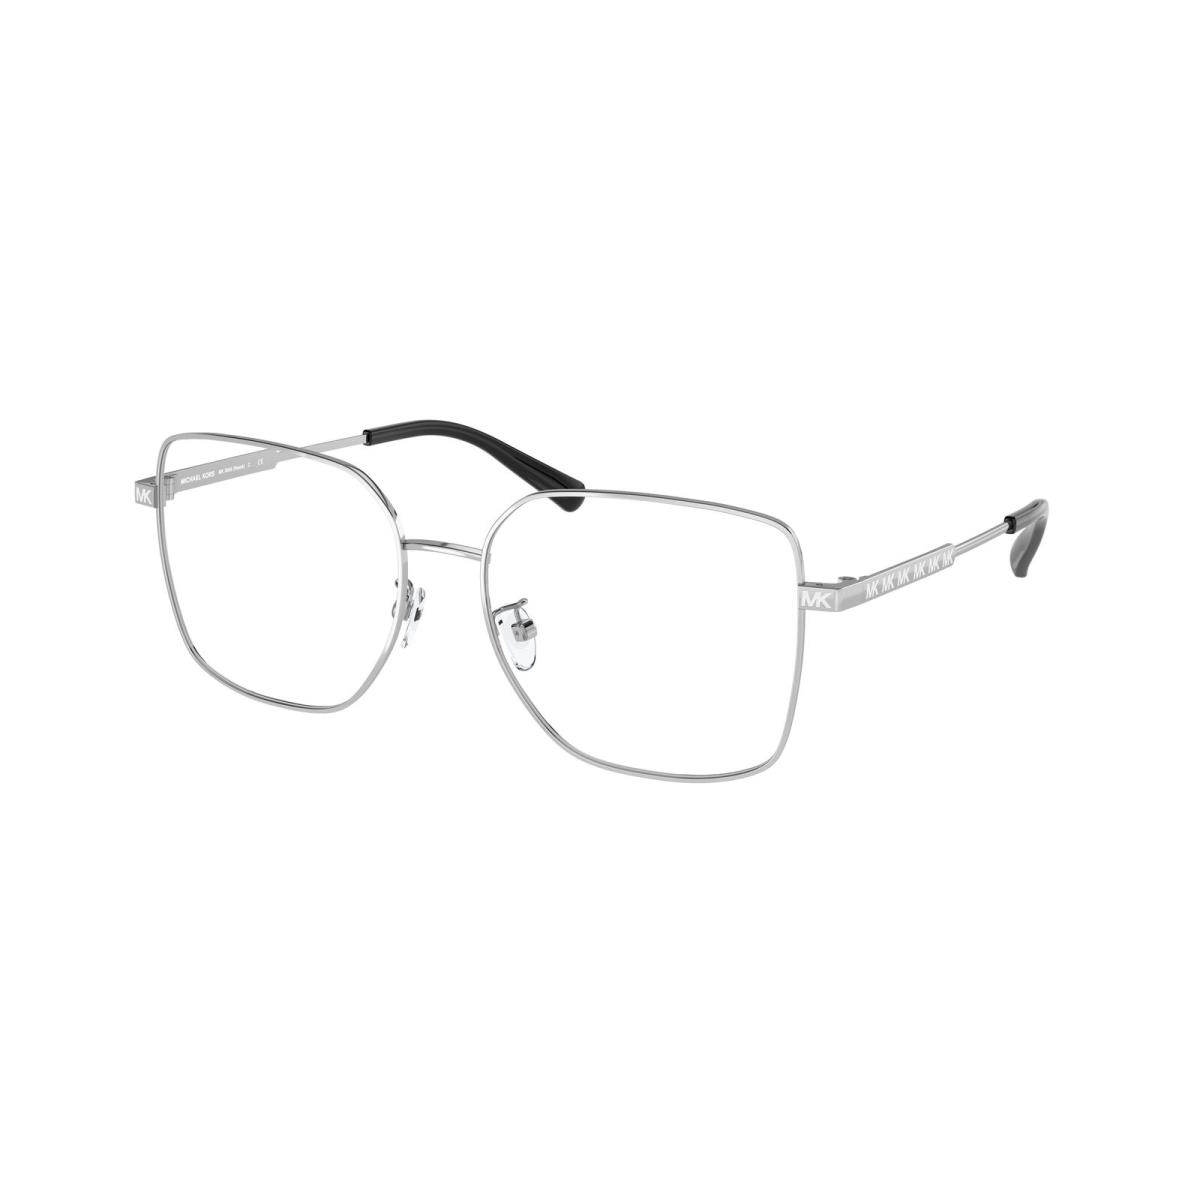 Michael Kors MK 3056 Naxos Silver 1153 Eyeglasses